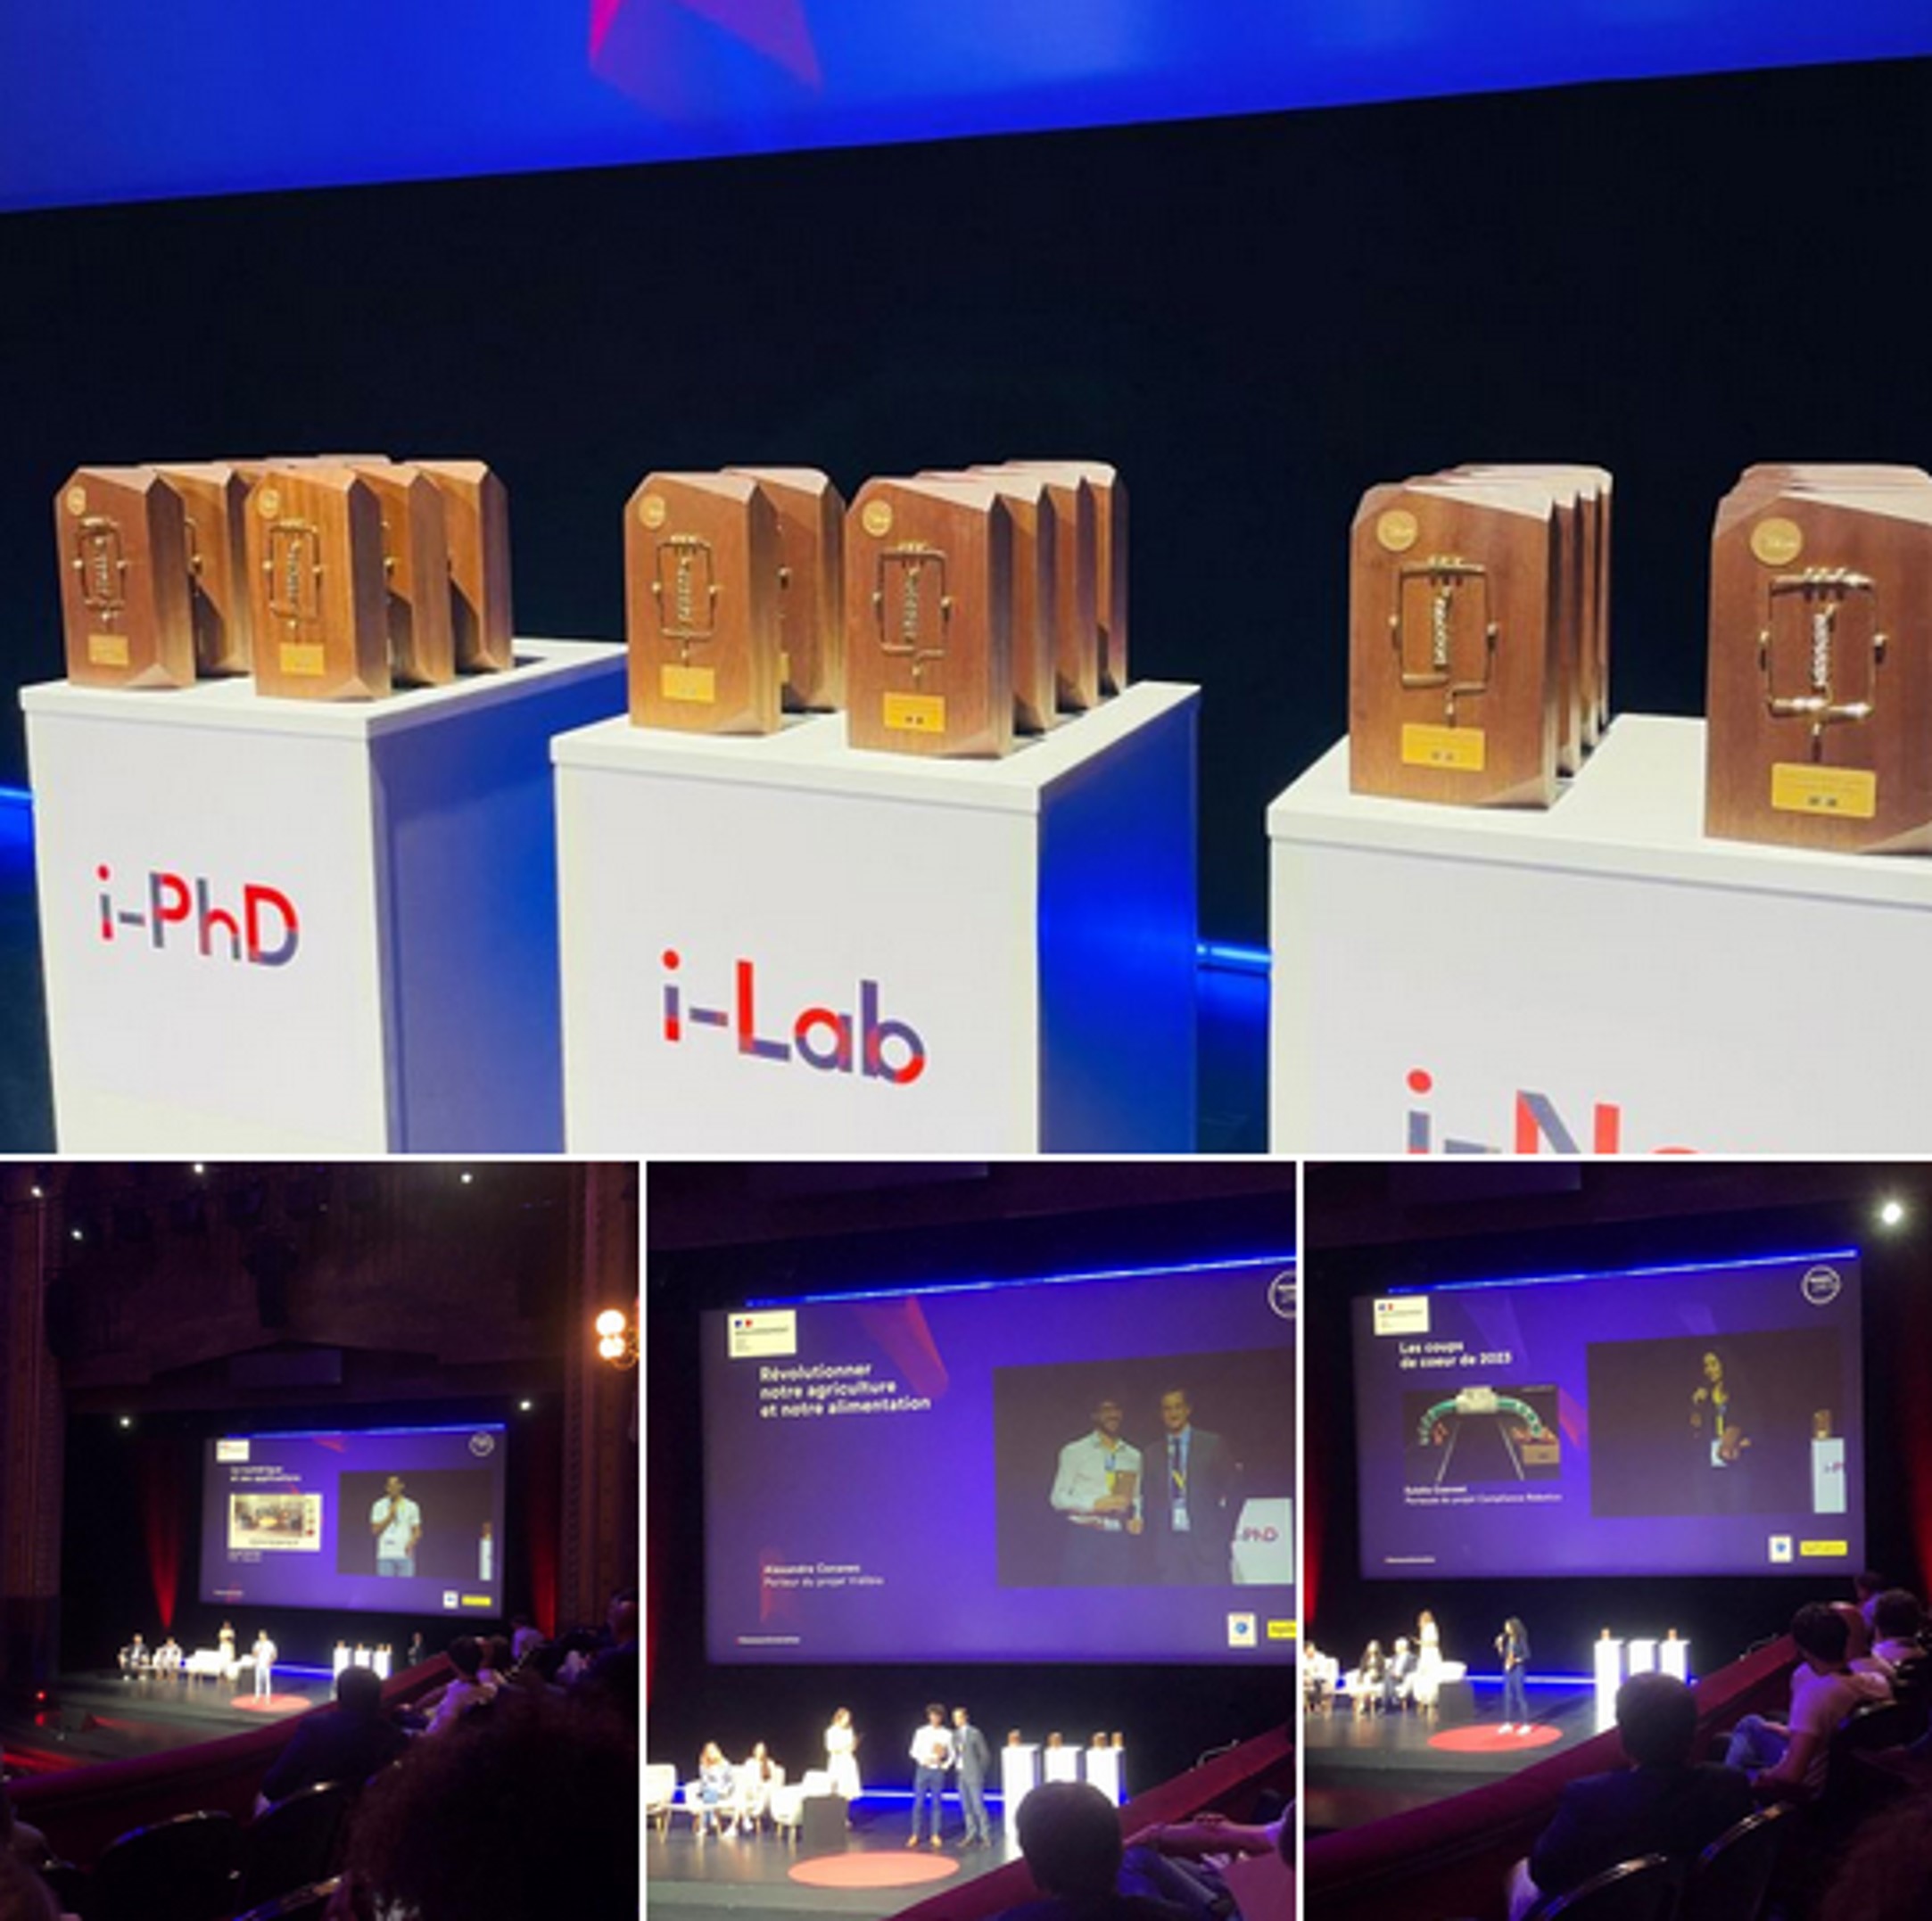 i-Lab, i-PhD, i-Nov, les prix d’innovation BPIFrance et Inria